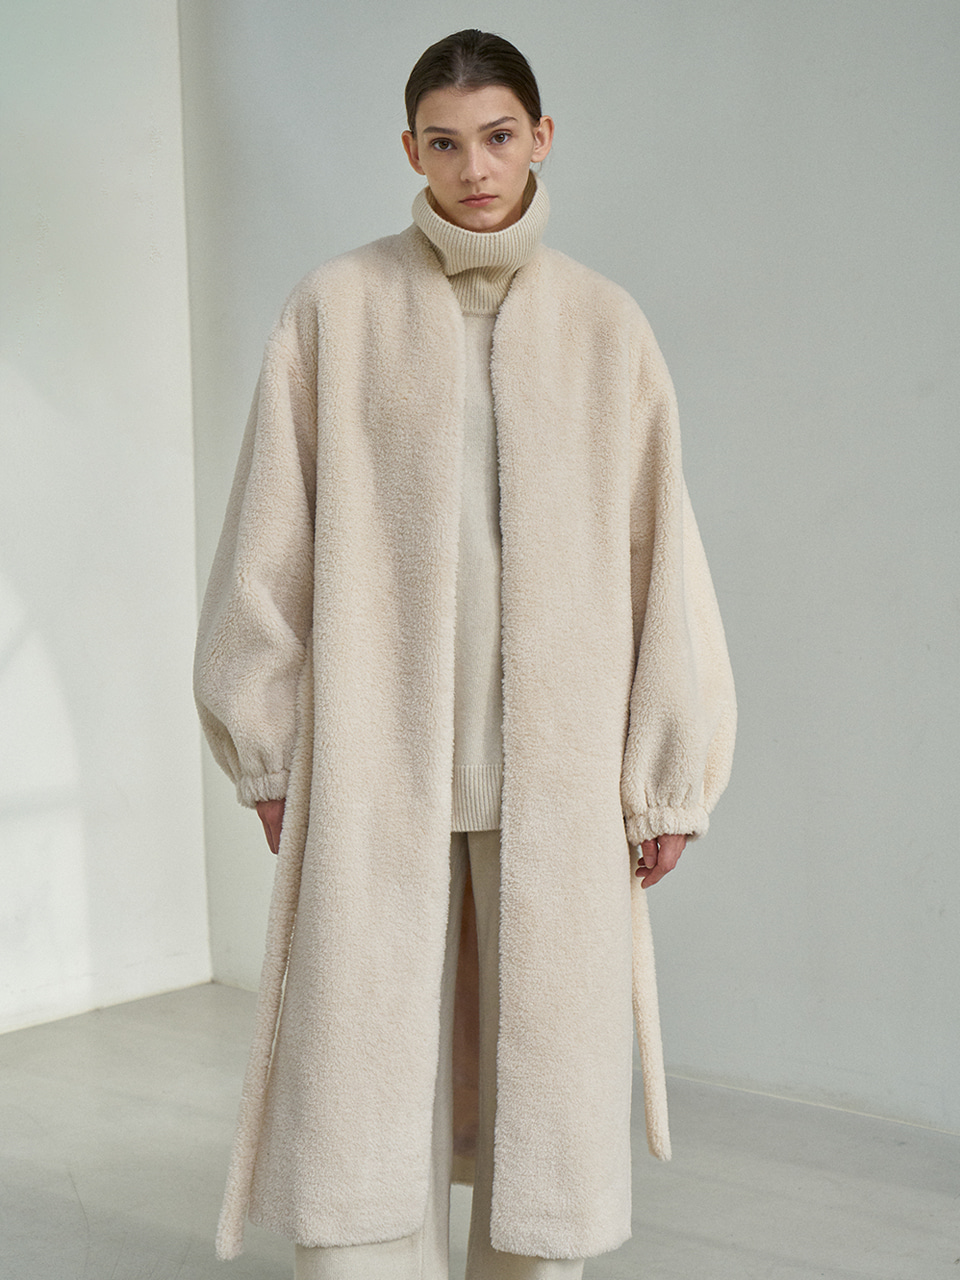 Eco fur nocollar robe coat ivory